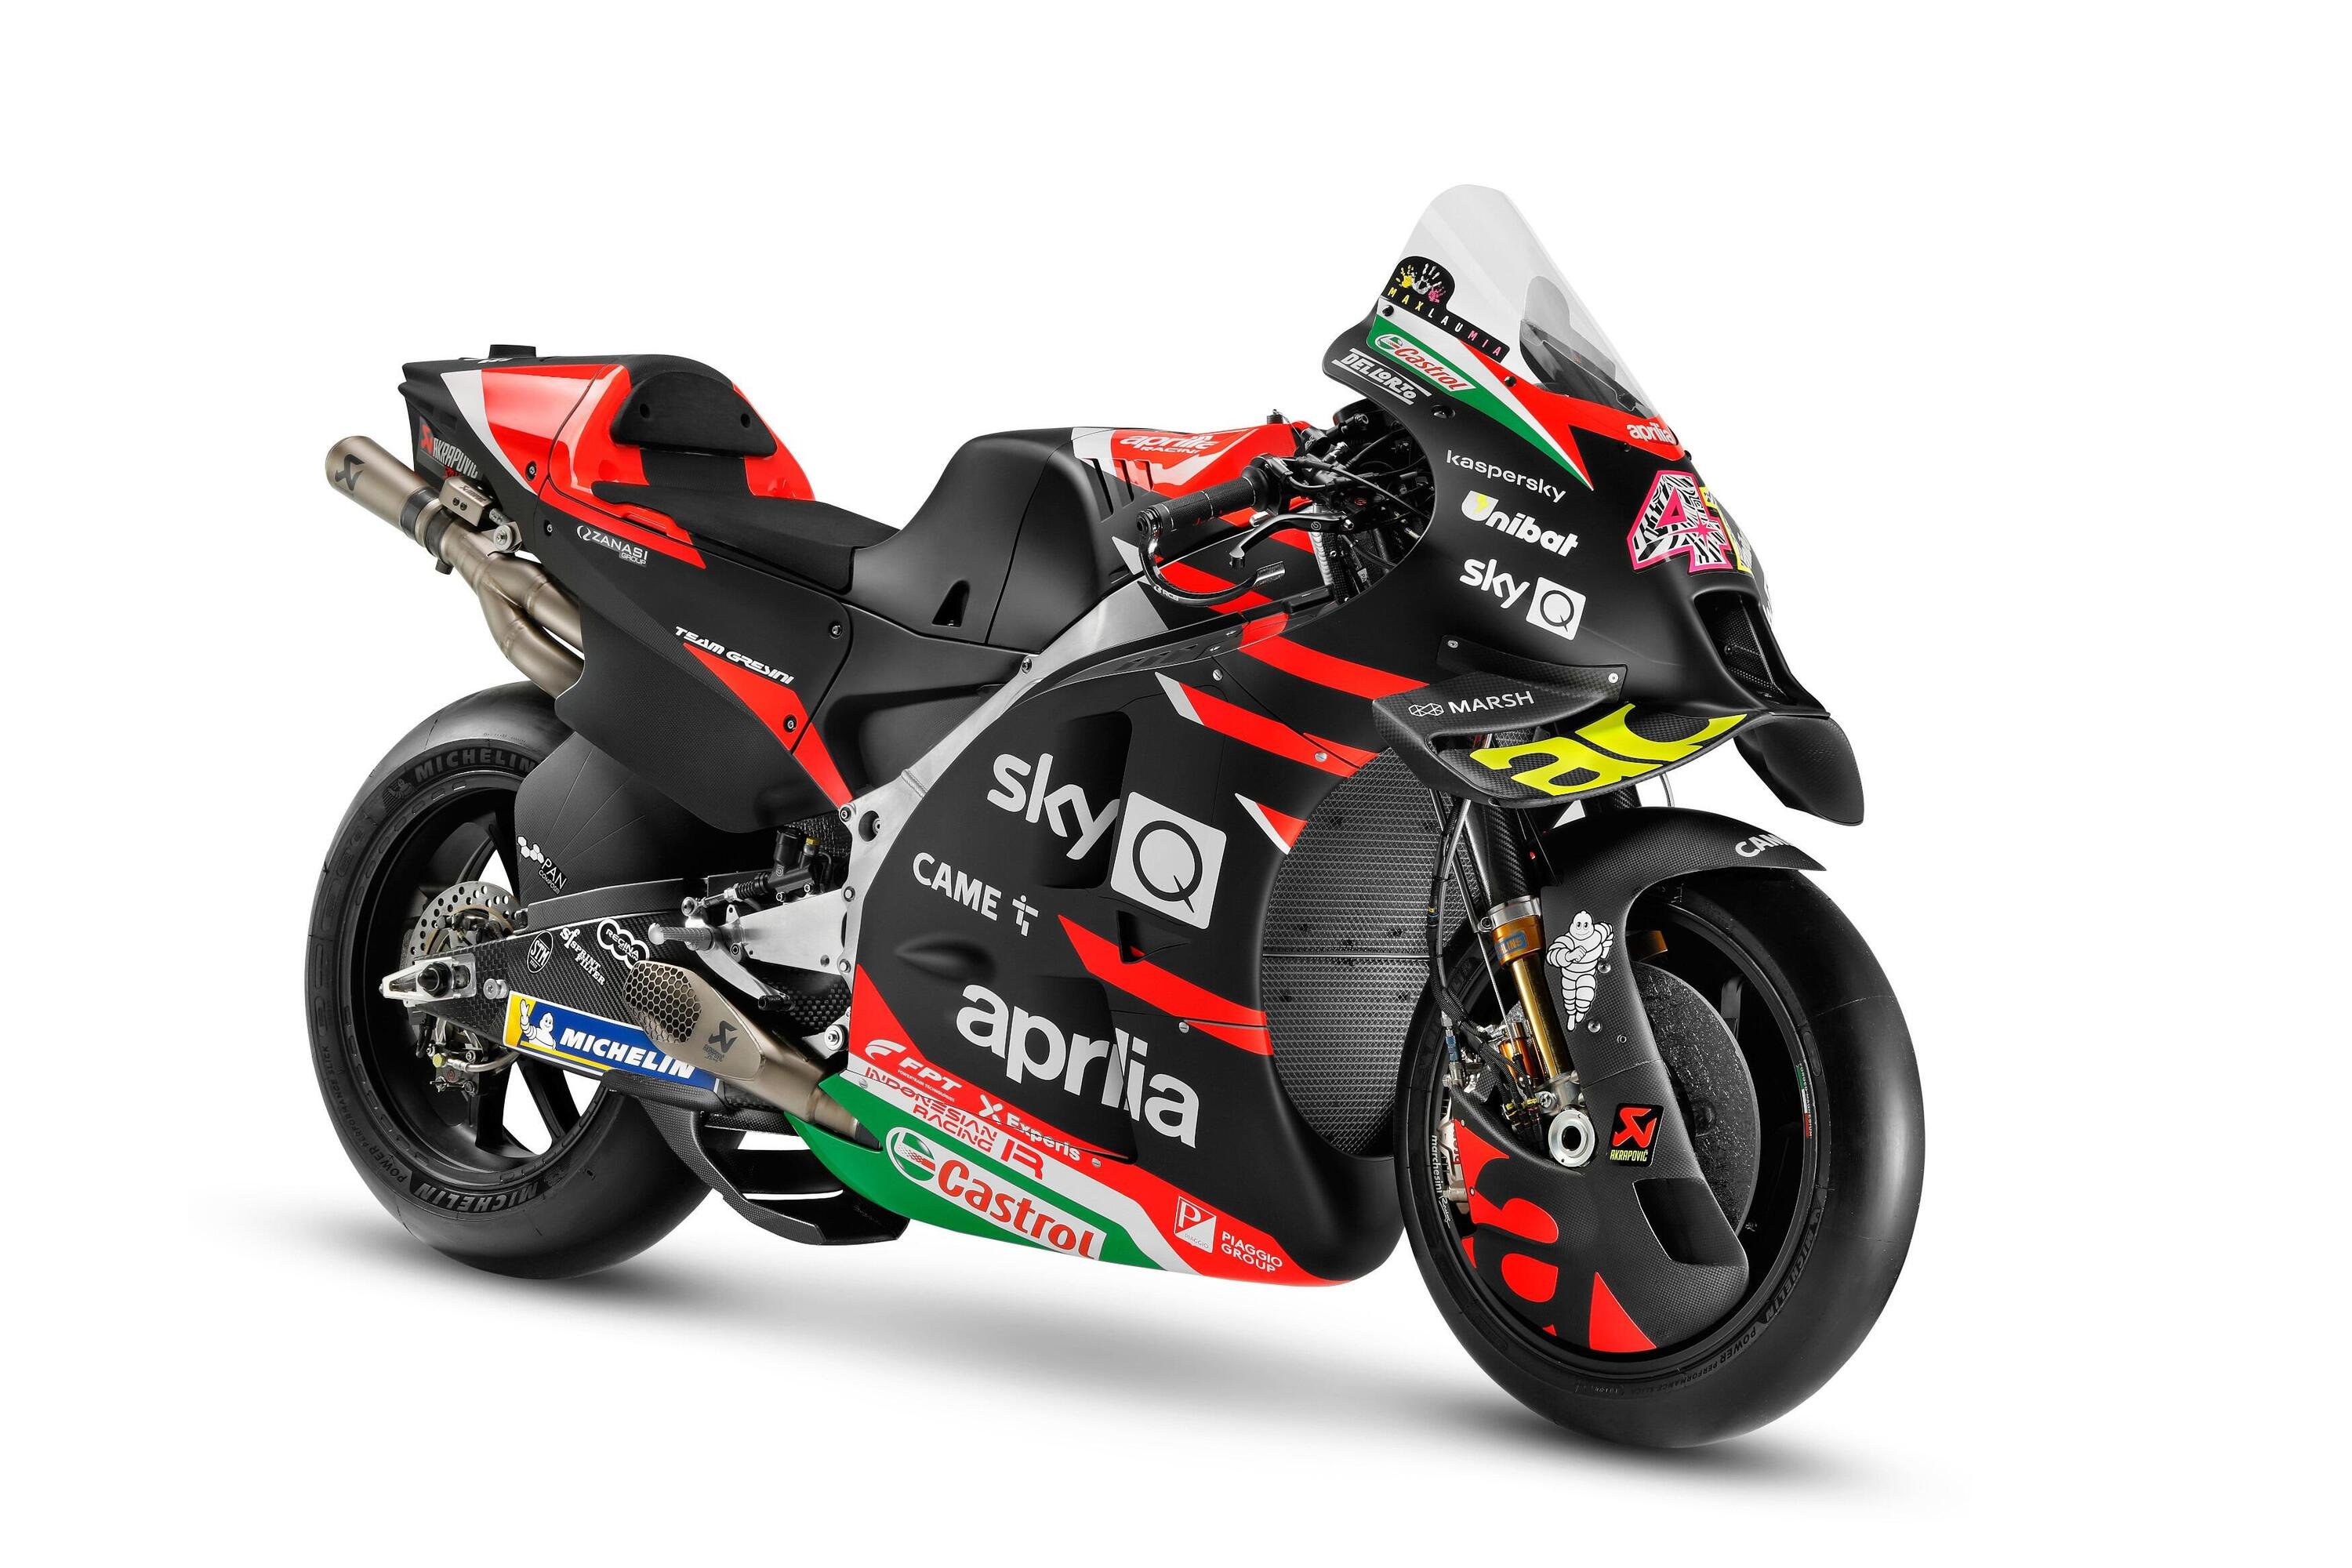 MotoGP: tutte le foto della RS-GP 2021 Aprilia Racing Team Gresini [GALLERY]